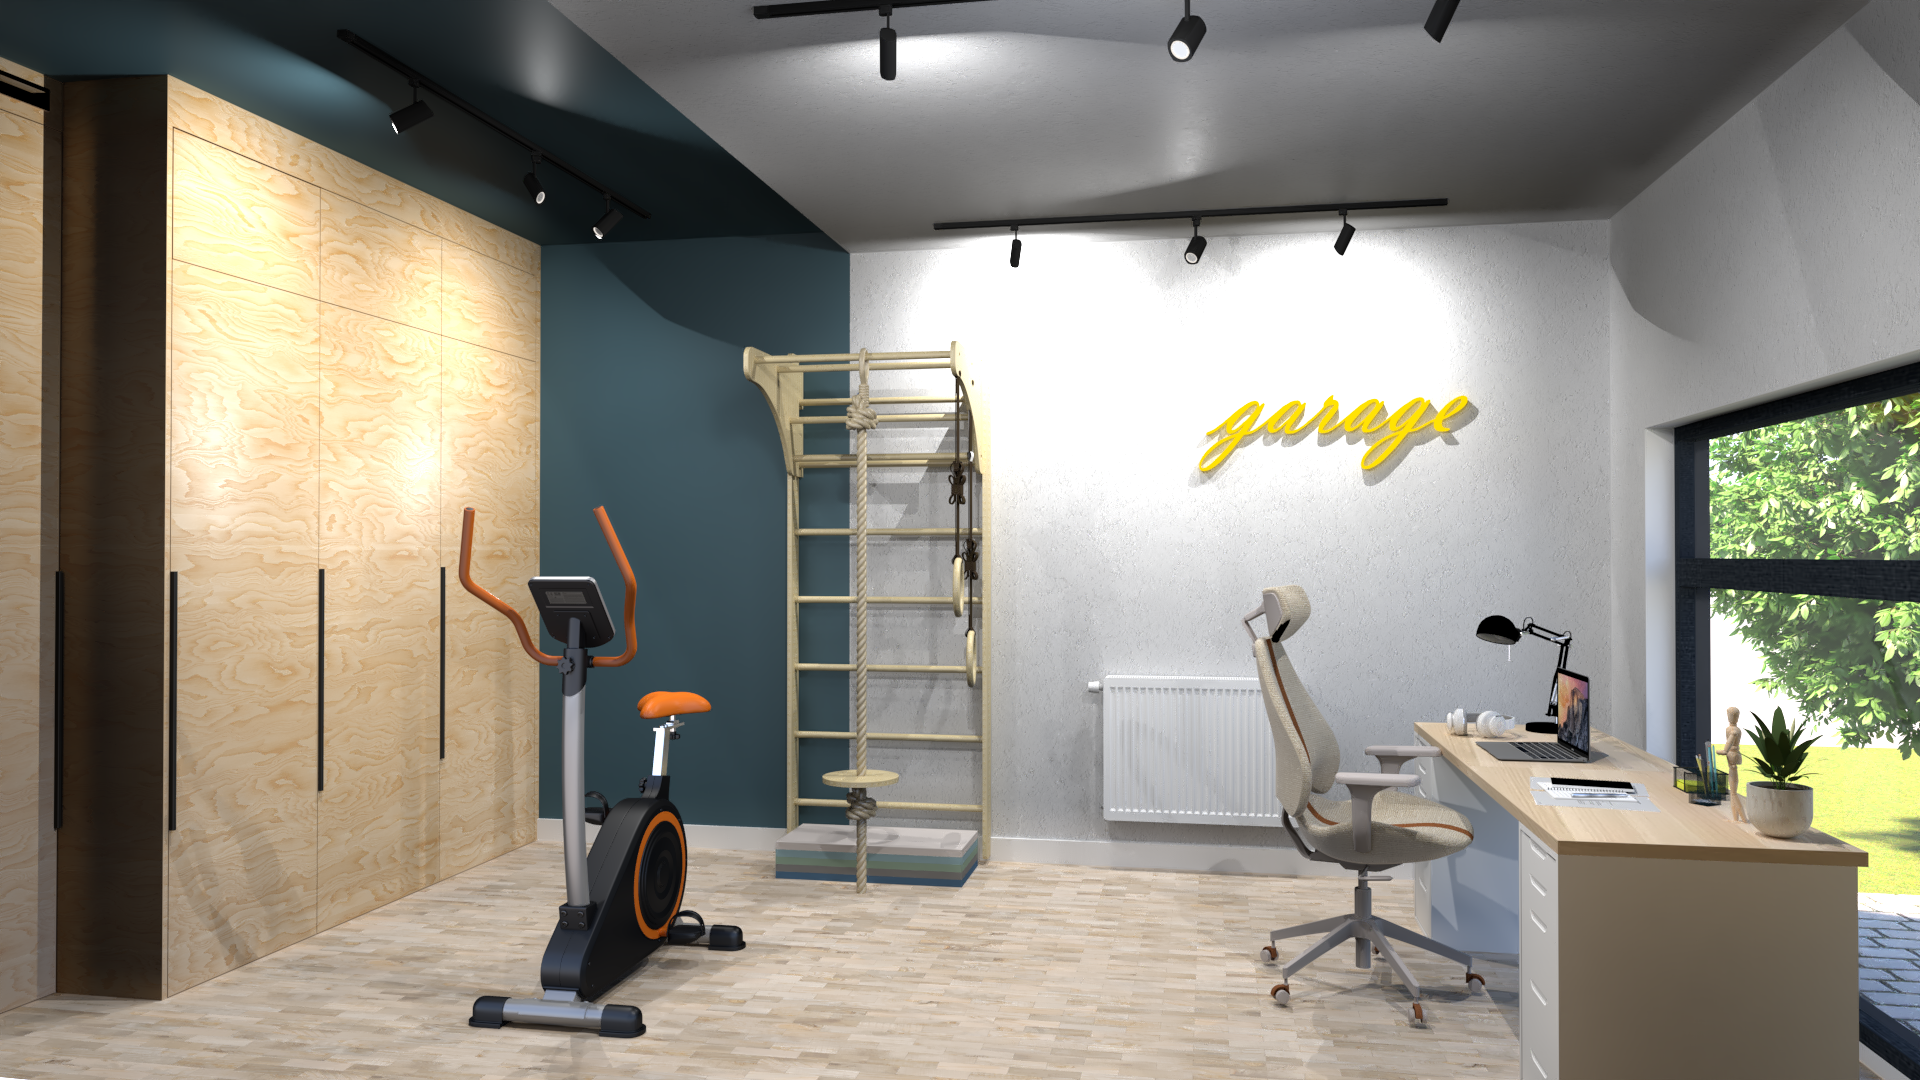 Garage - domowe biuro i siłownia